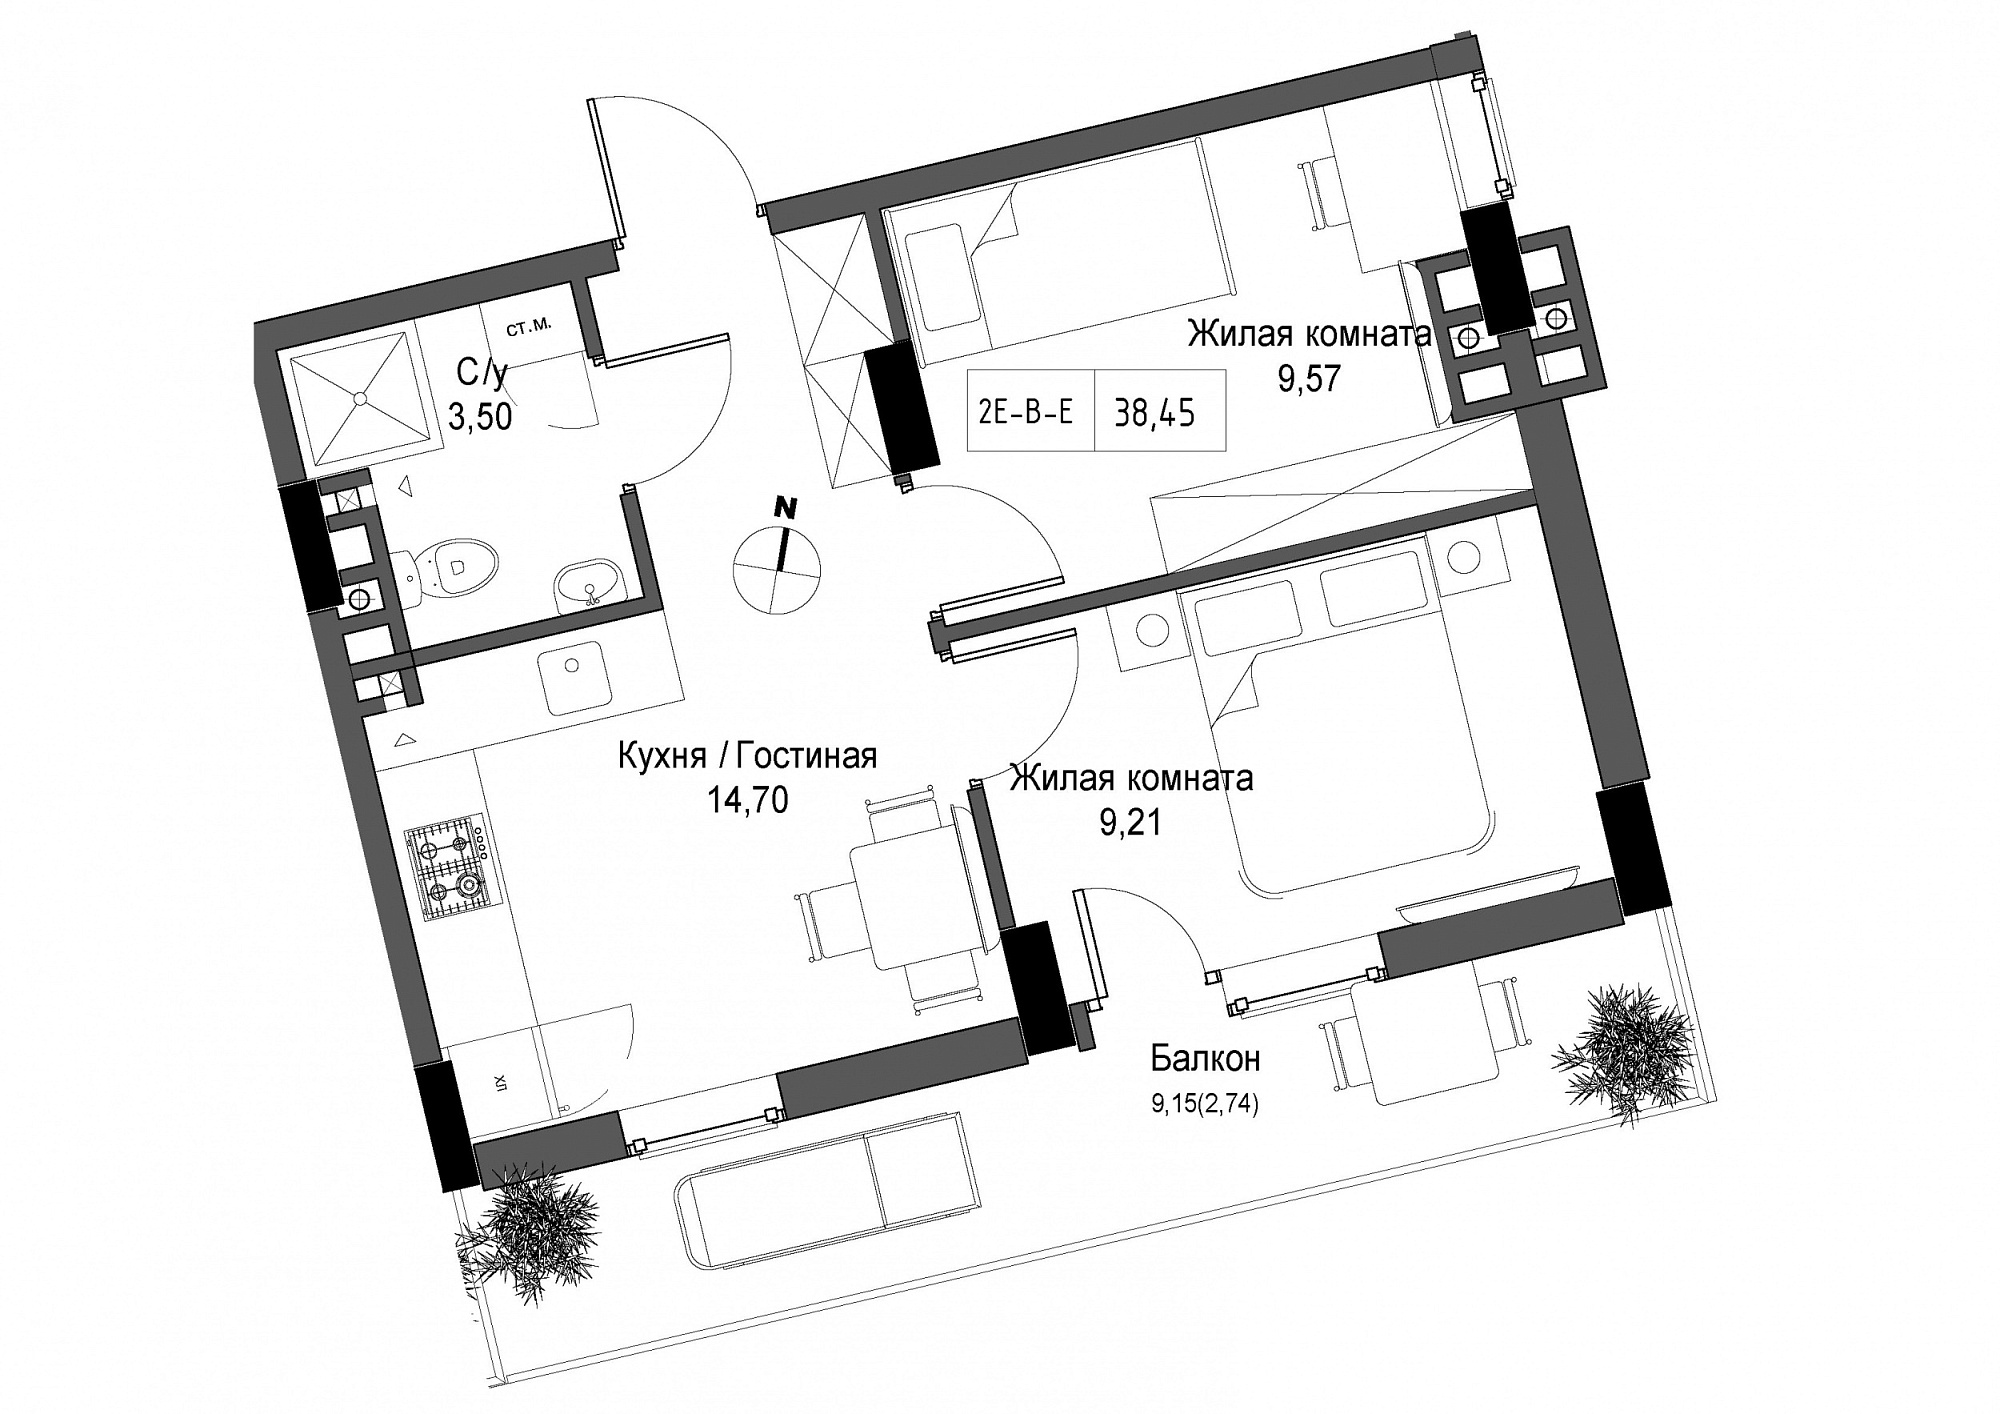 Planning 2-rm flats area 38.45m2, UM-004-07/0011.